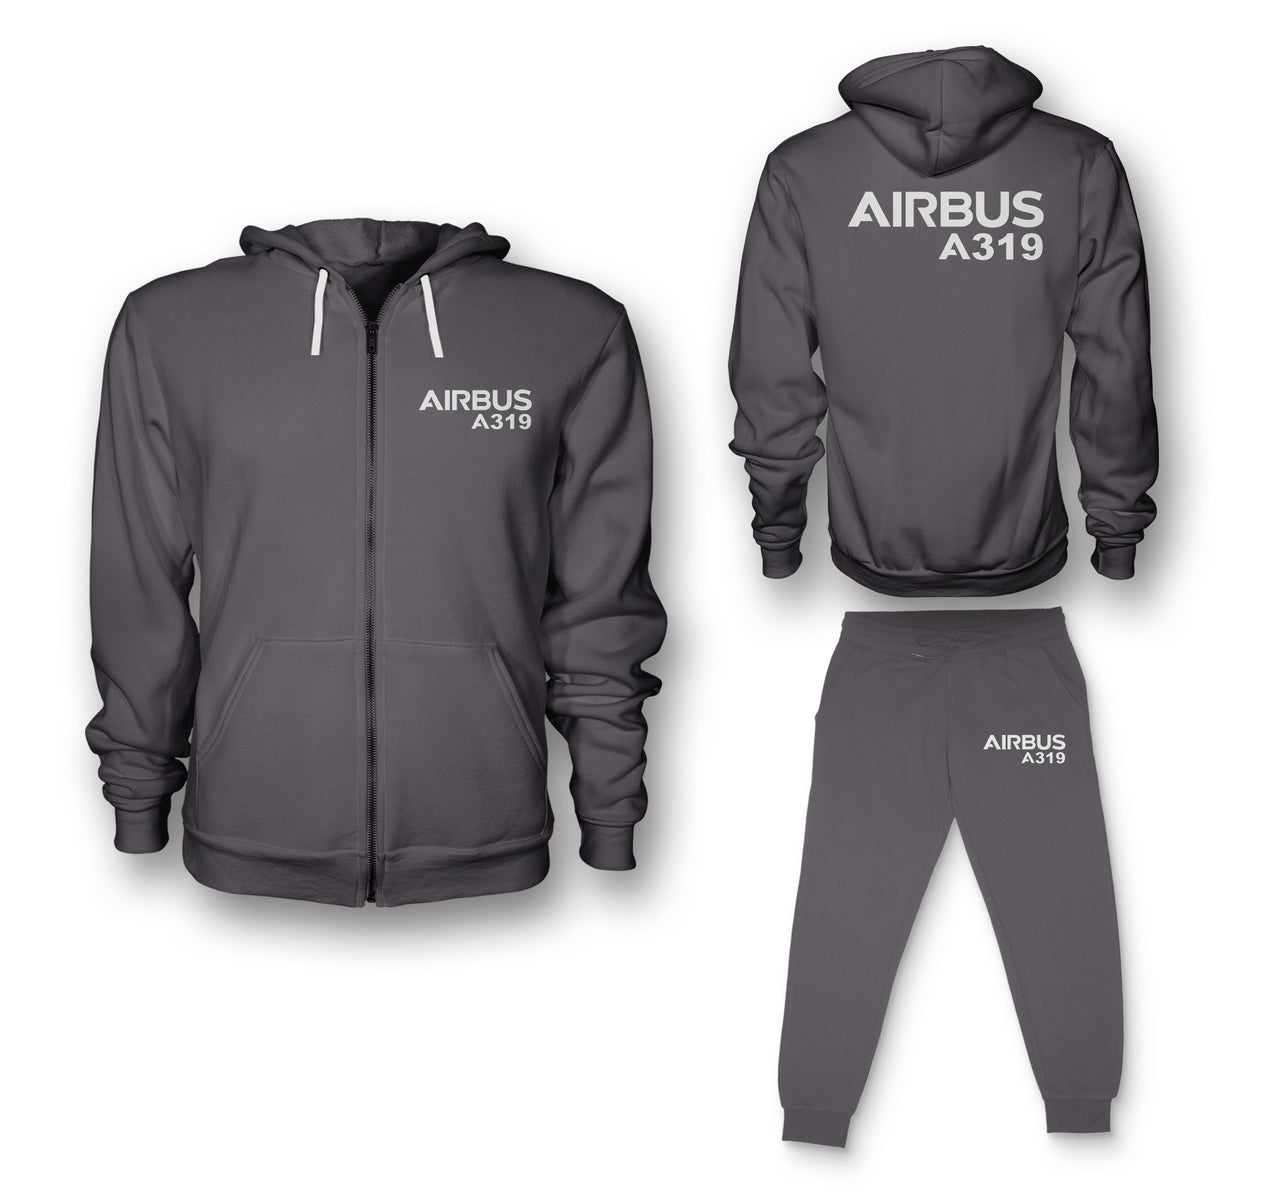 Airbus A319 & Text Designed Zipped Hoodies & Sweatpants Set